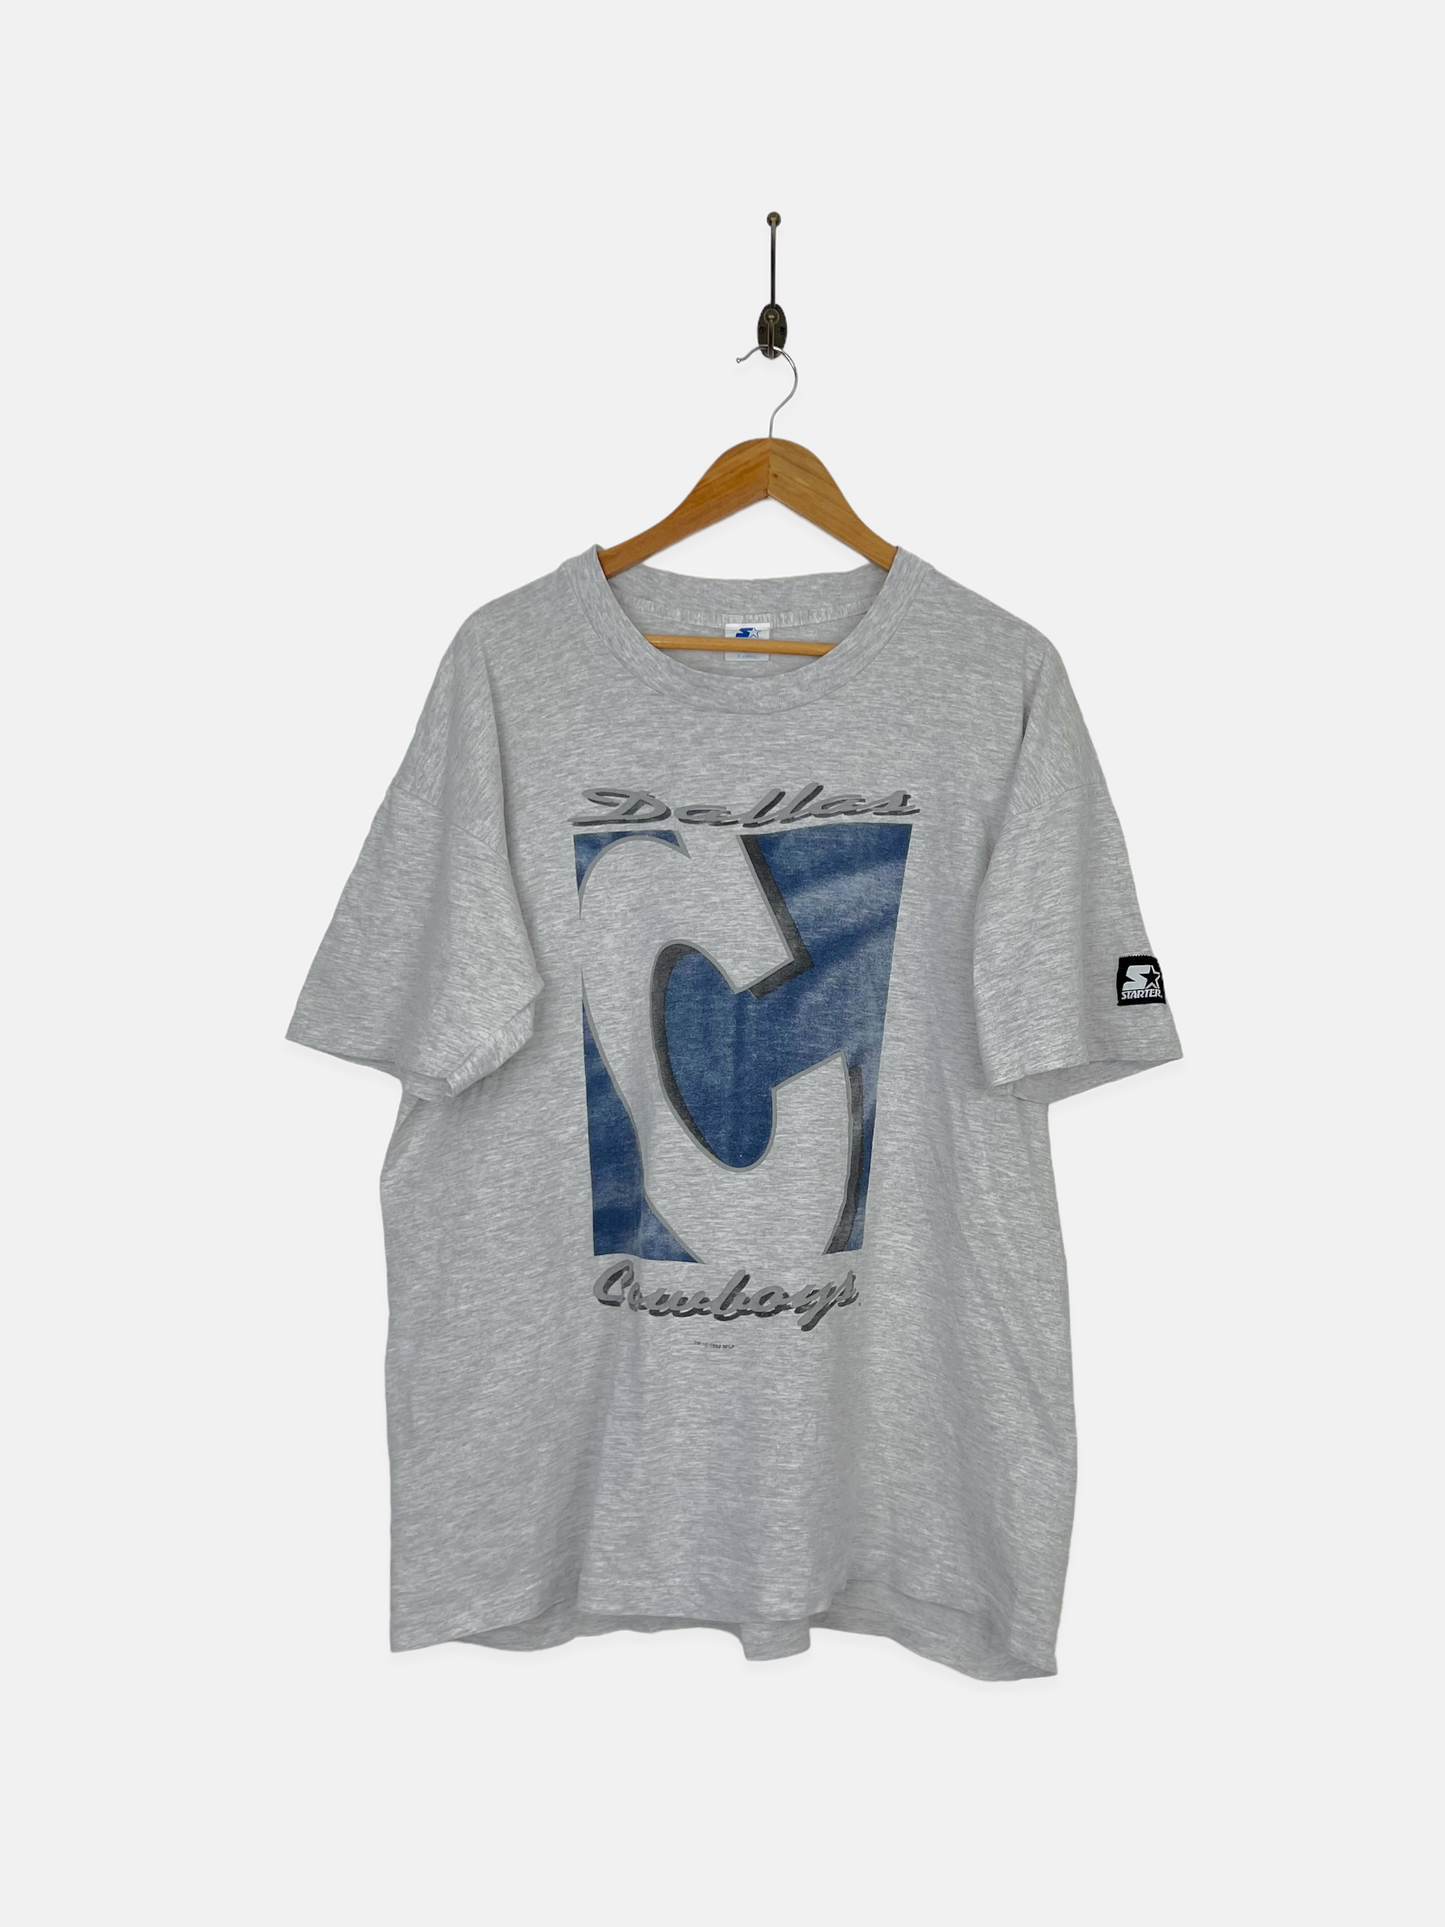 1993 Dallas Cowboys Starter NFL USA Made Vintage T-Shirt Size XL-2XL